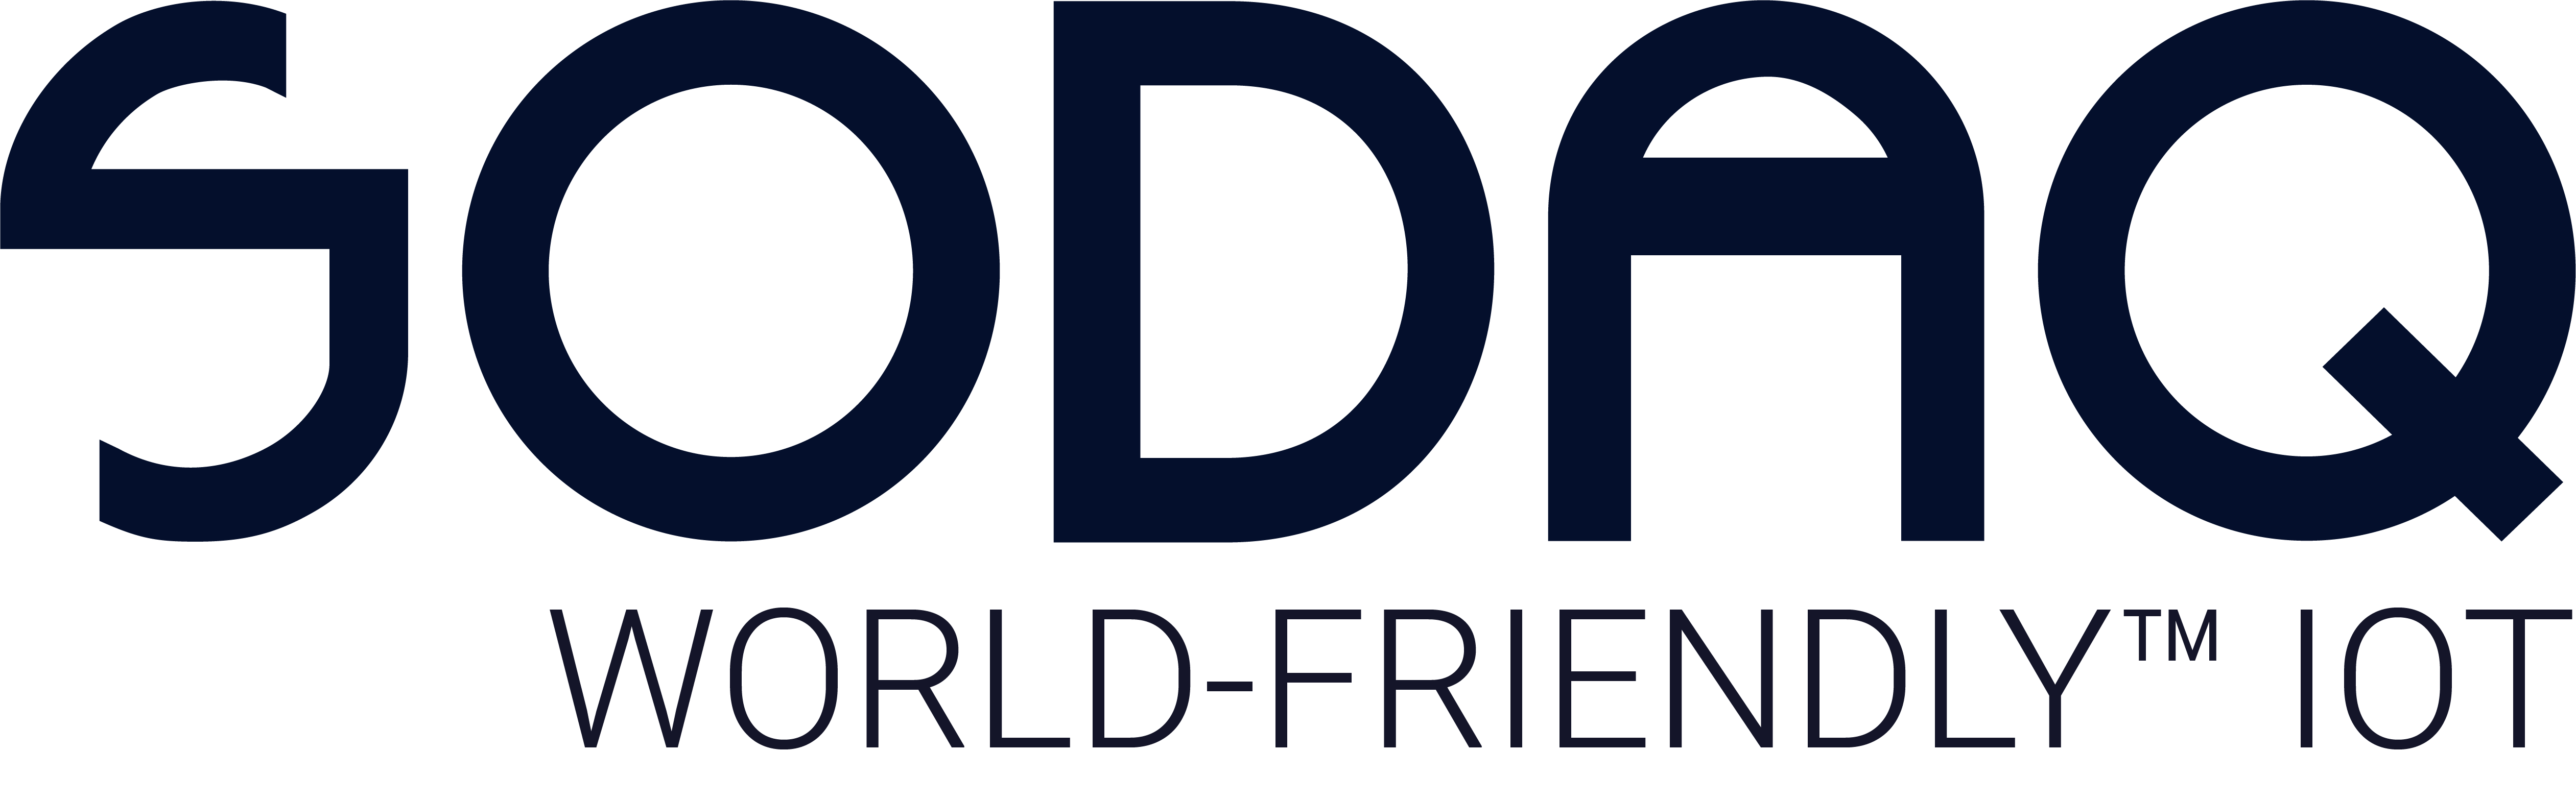 Sodaq logo